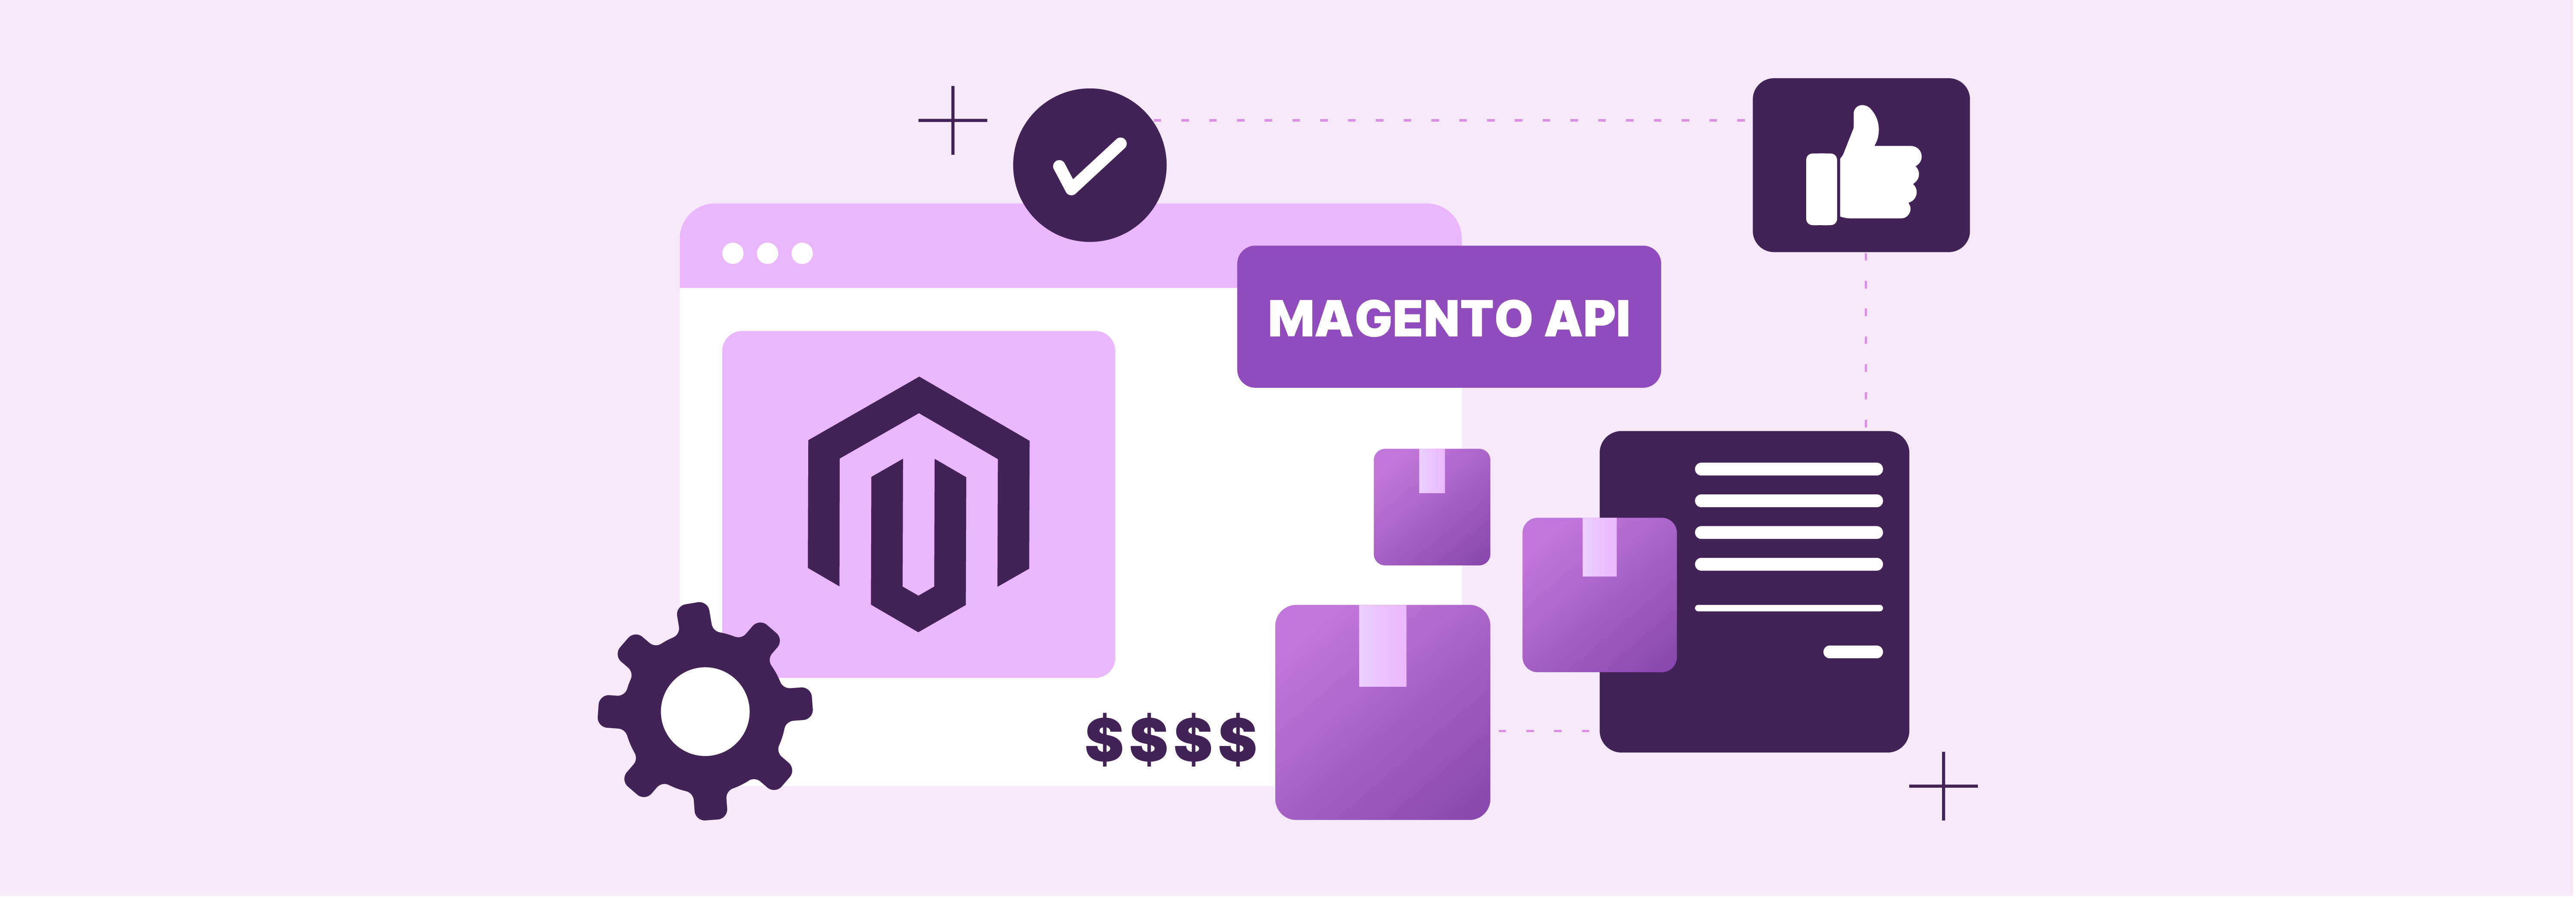 Magento API for Product Management